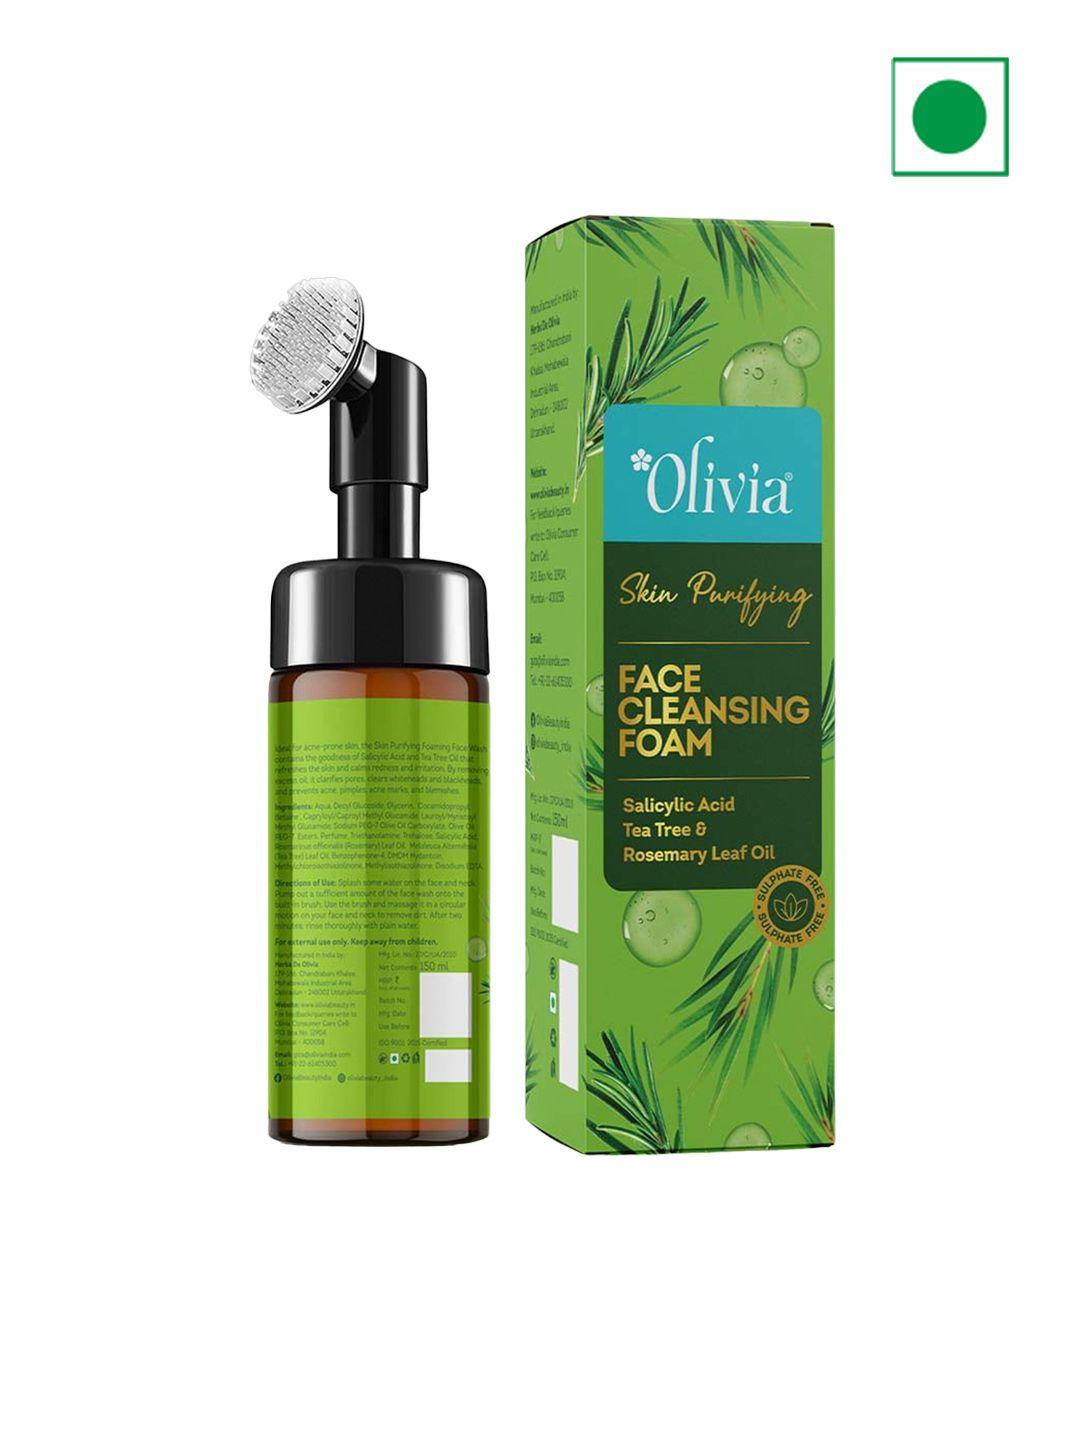 olivia skin purifying face cleansing foam with salicylic acid & tea tree - 100ml